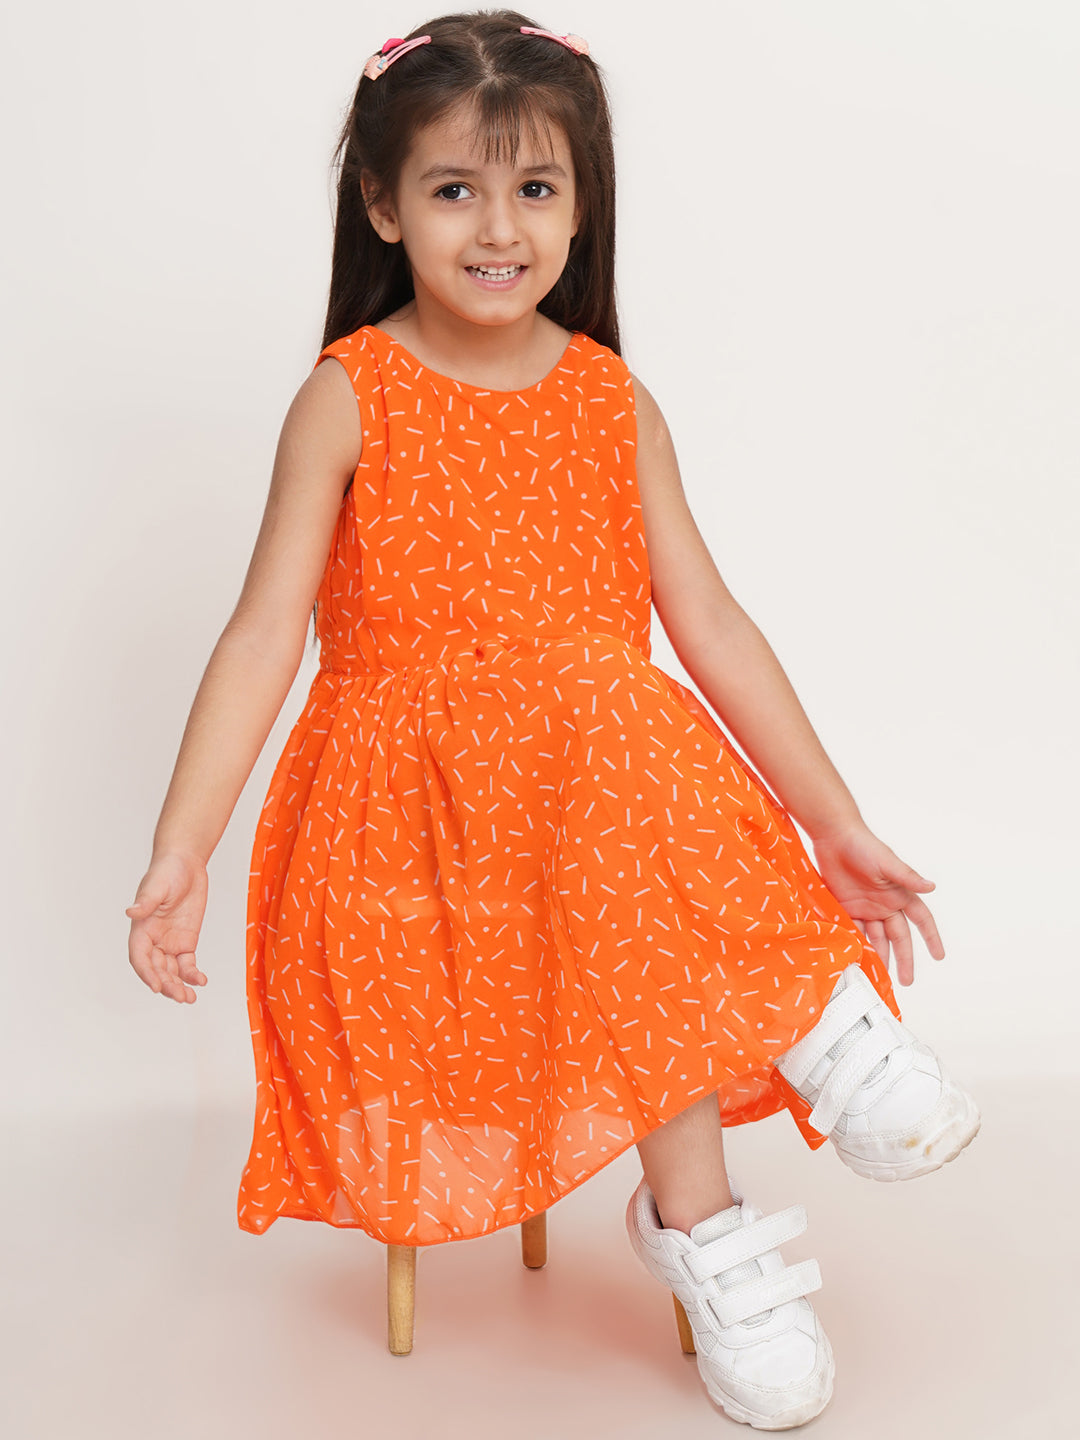 CREATIVE KID'S Girl Orange & White Geometry Print A-Line Dress